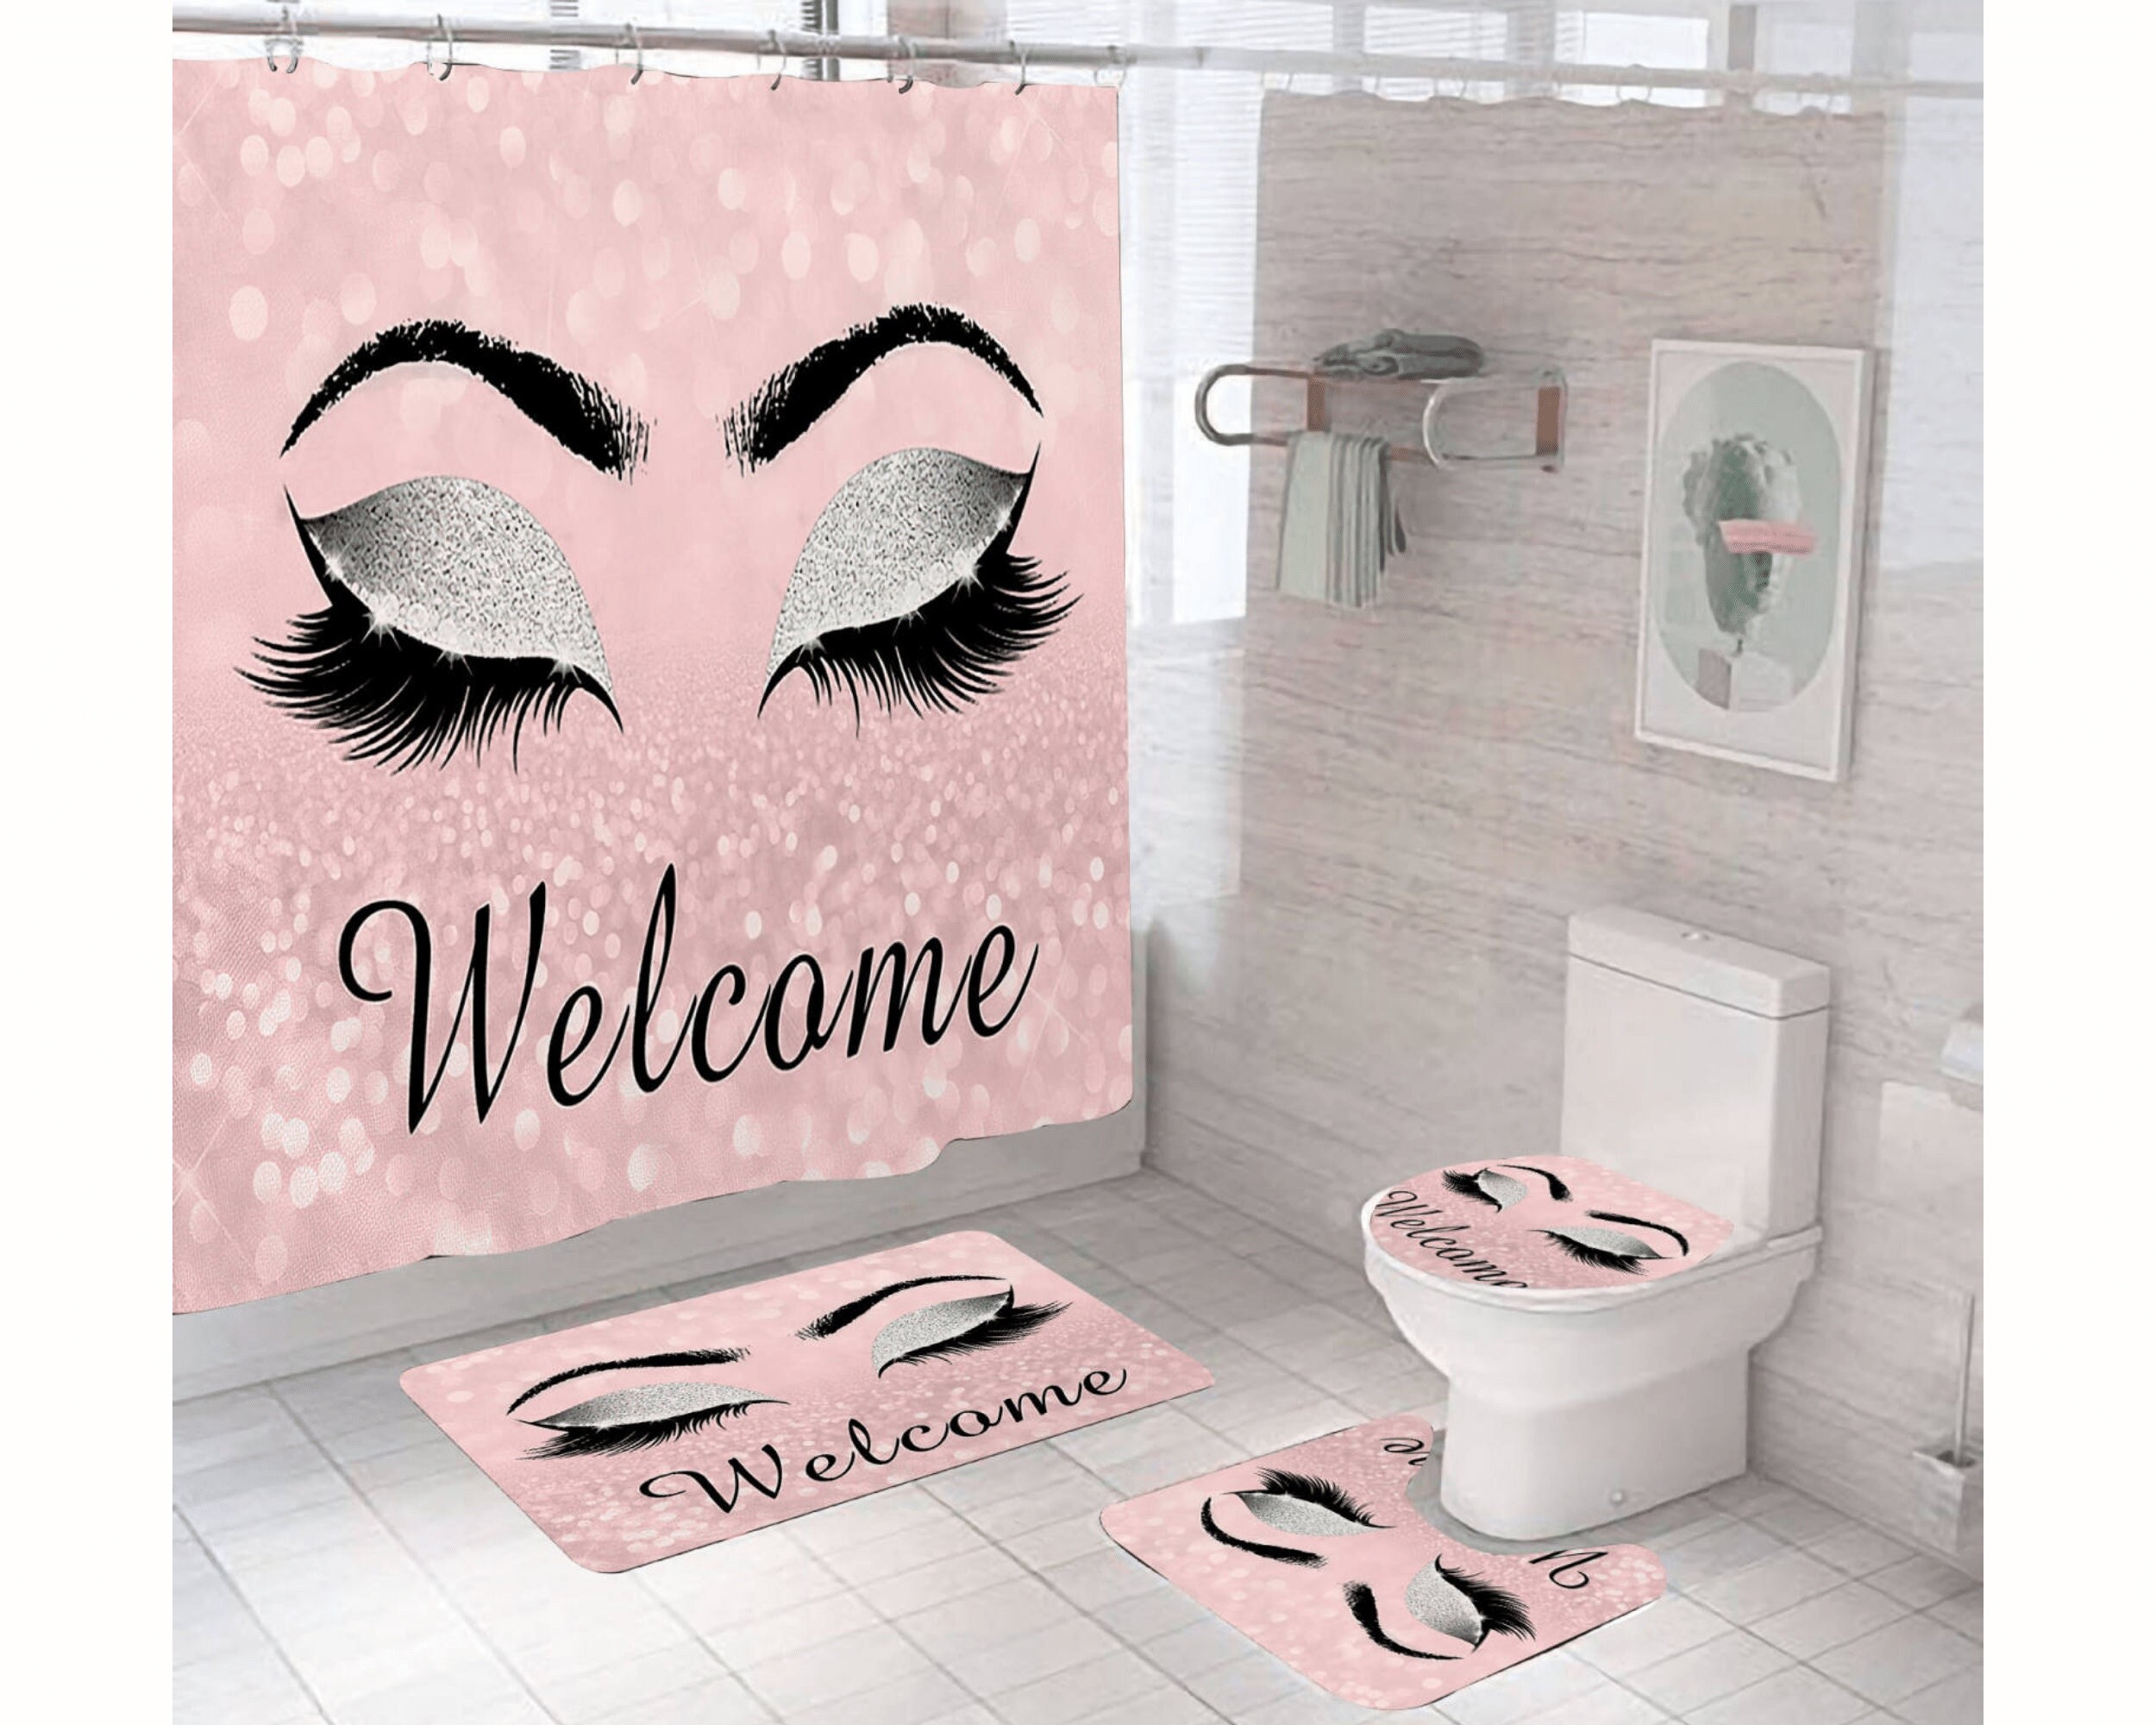 Gucci GC logo luxury bathroom set Italy beige shower curtain